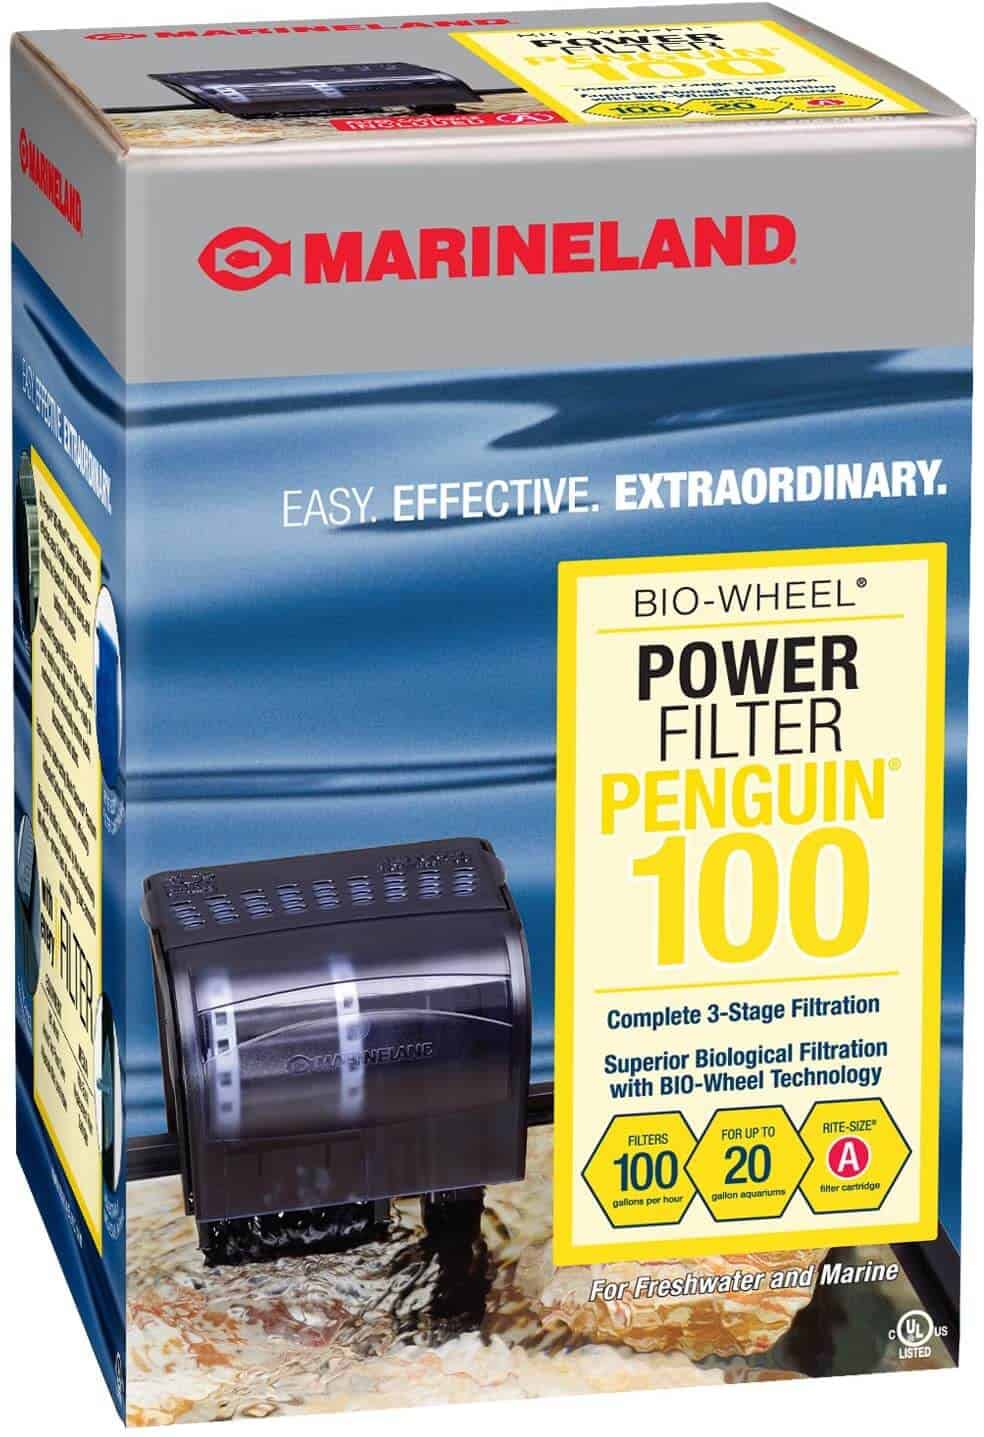 MarineLand Penguin Power Filters